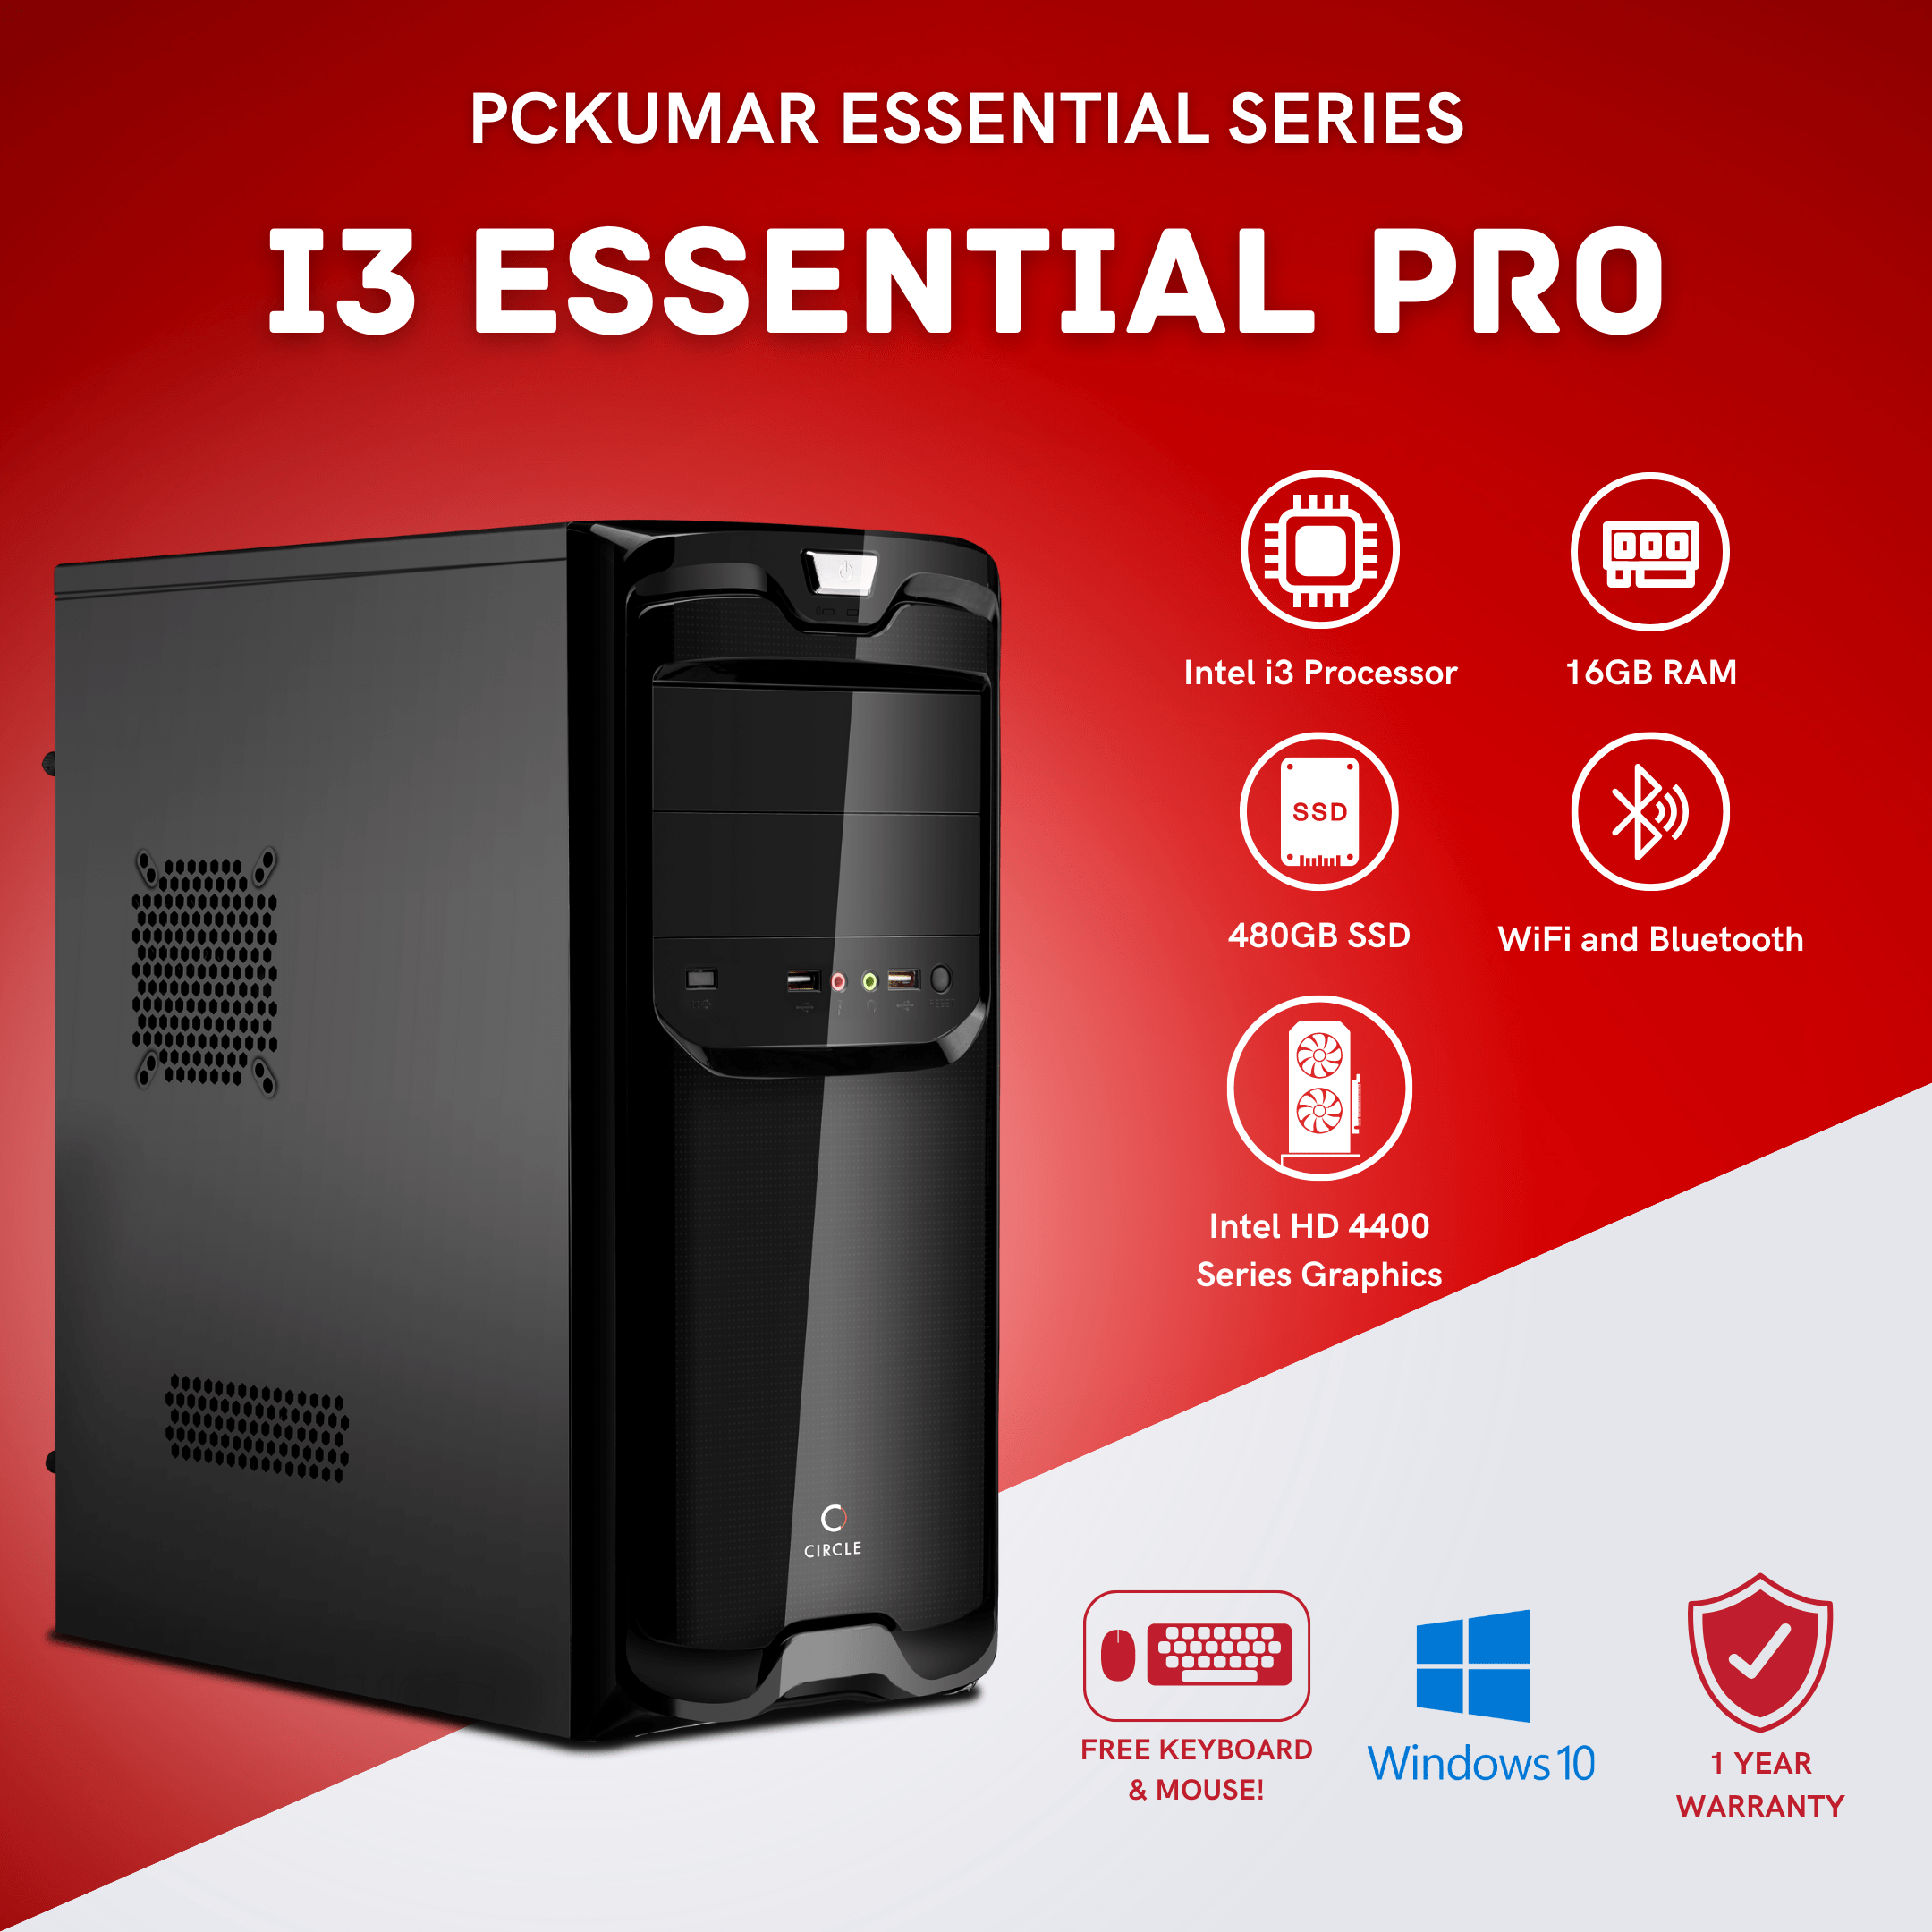 PC Kumar Essential Pro Intel i3 Basic PC for 15999/-